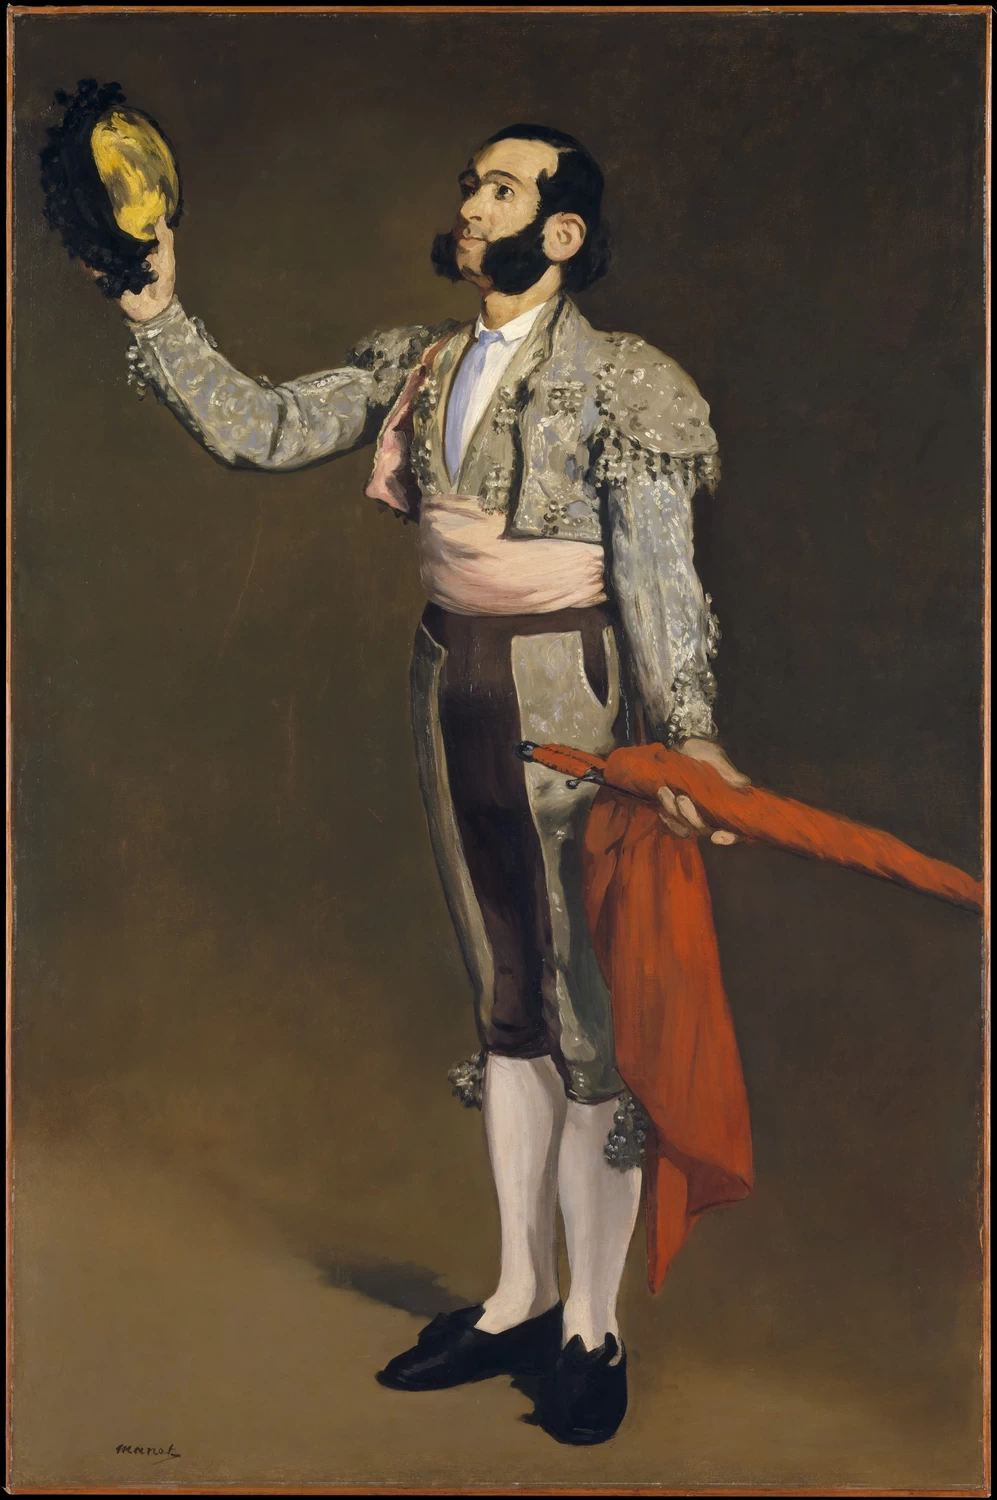  145-Édouard Manet, Il Matador, 1866-67-Metropolitan Museum of Art, New York 